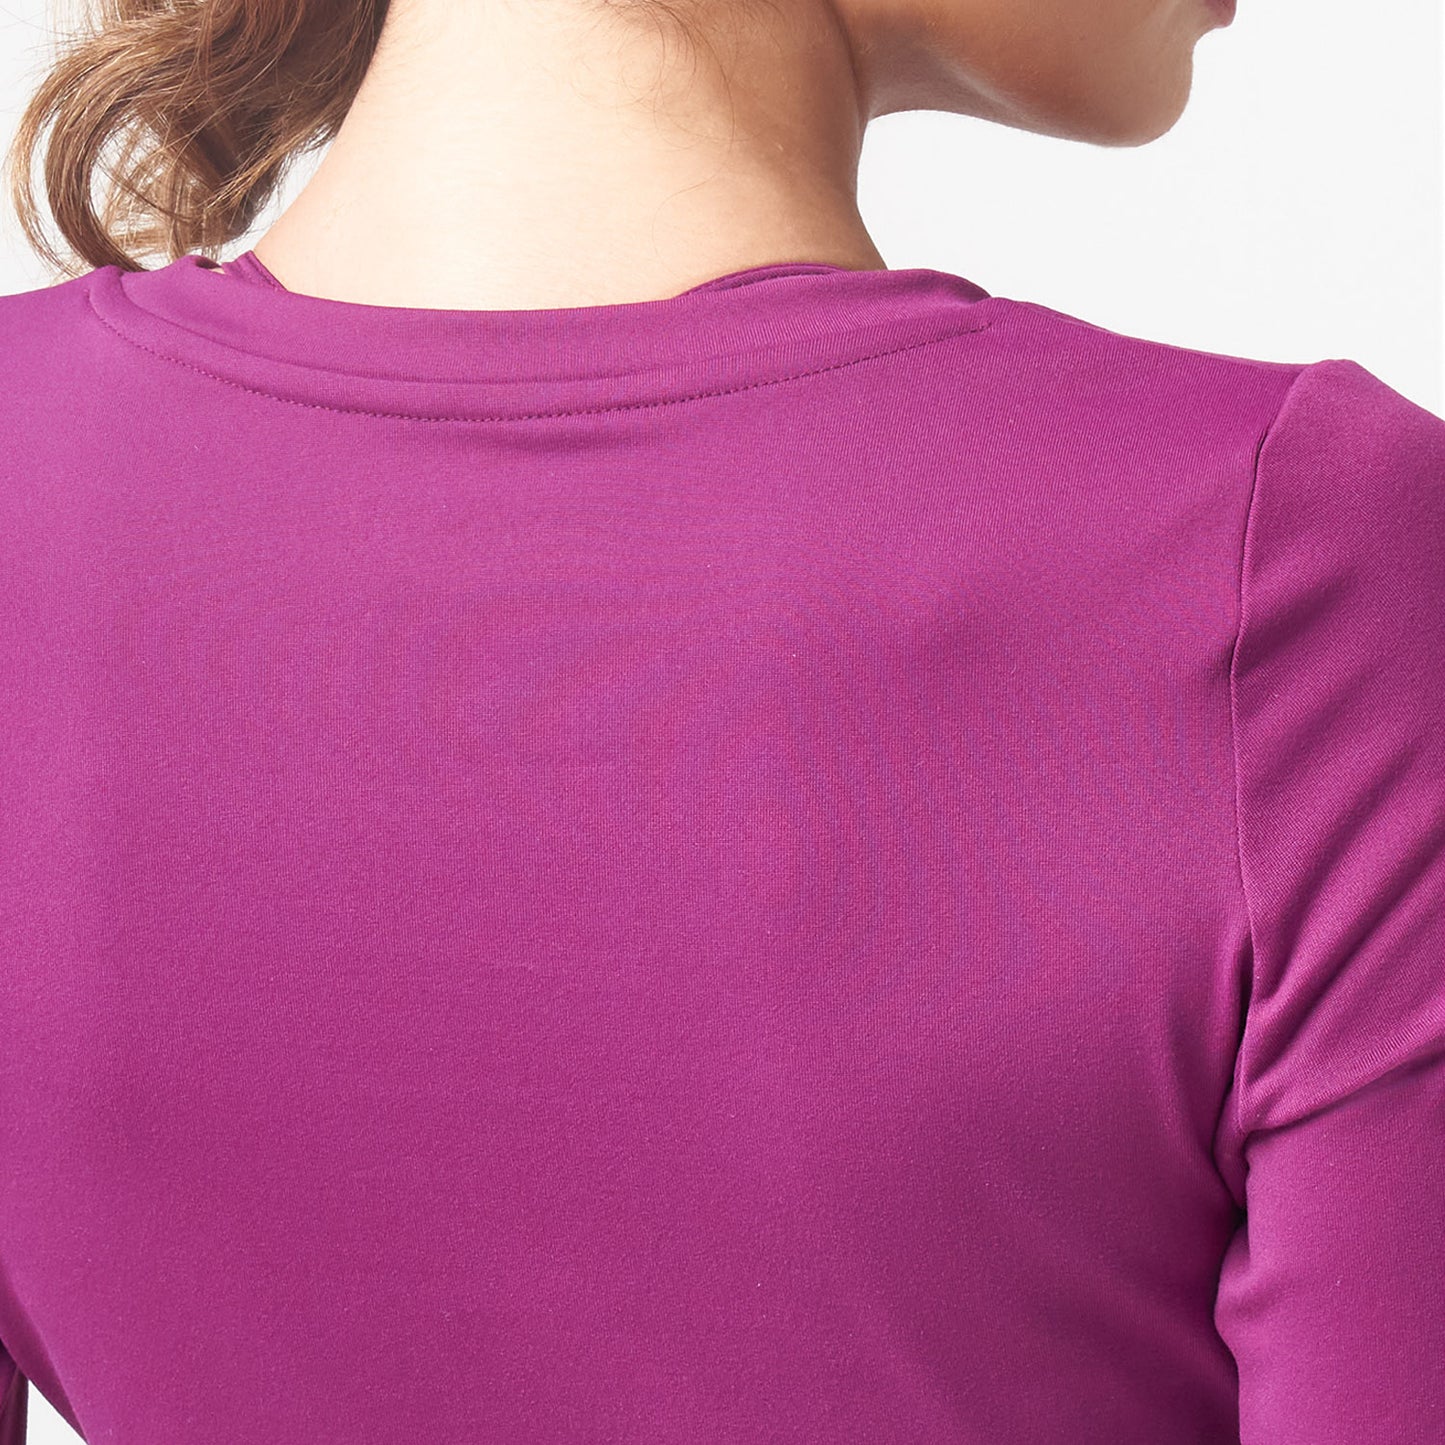 squatwolf-gym-wear-essential-full-sleeves-crop-top-dark-purple-workout-top-for-women